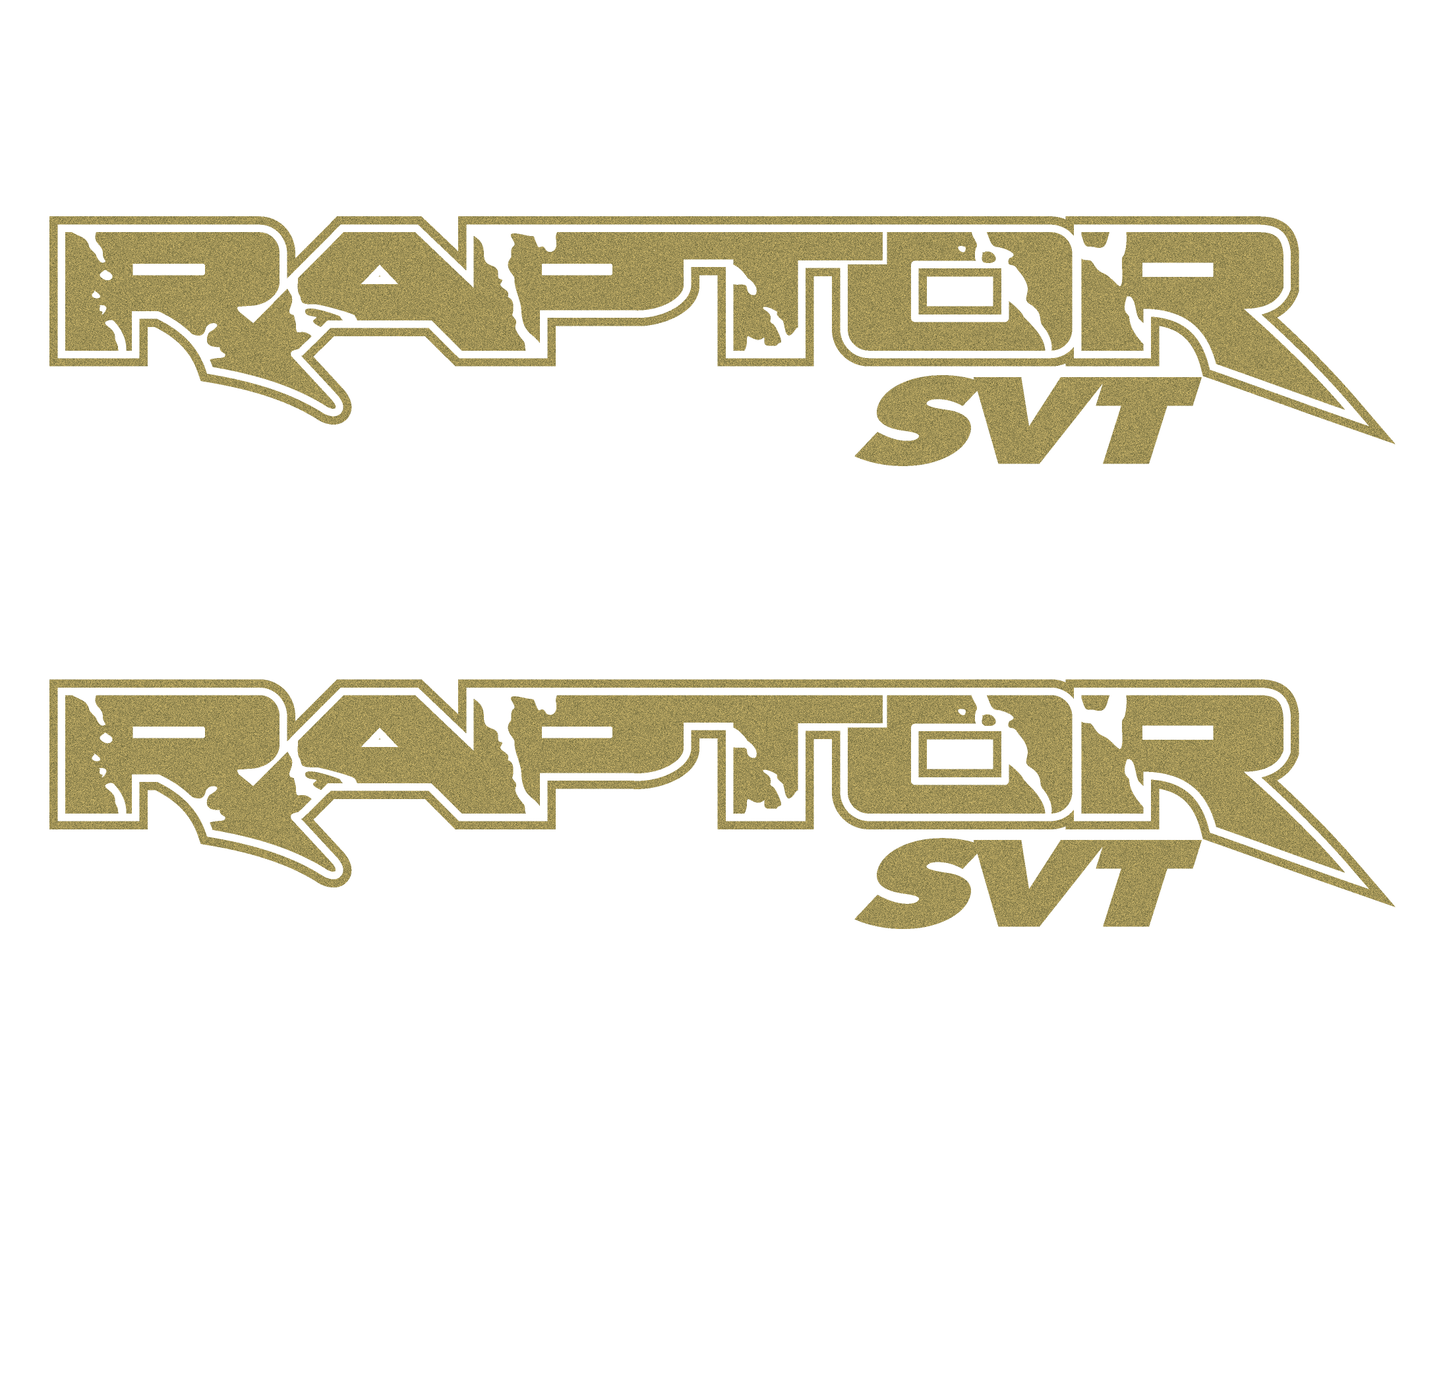 Shop Vinyl Design F-150 Raptor SVT Replacement Bedside Decals #010 Vehicle Decal Gold Gloss Shop Vinyl Design decals stickers